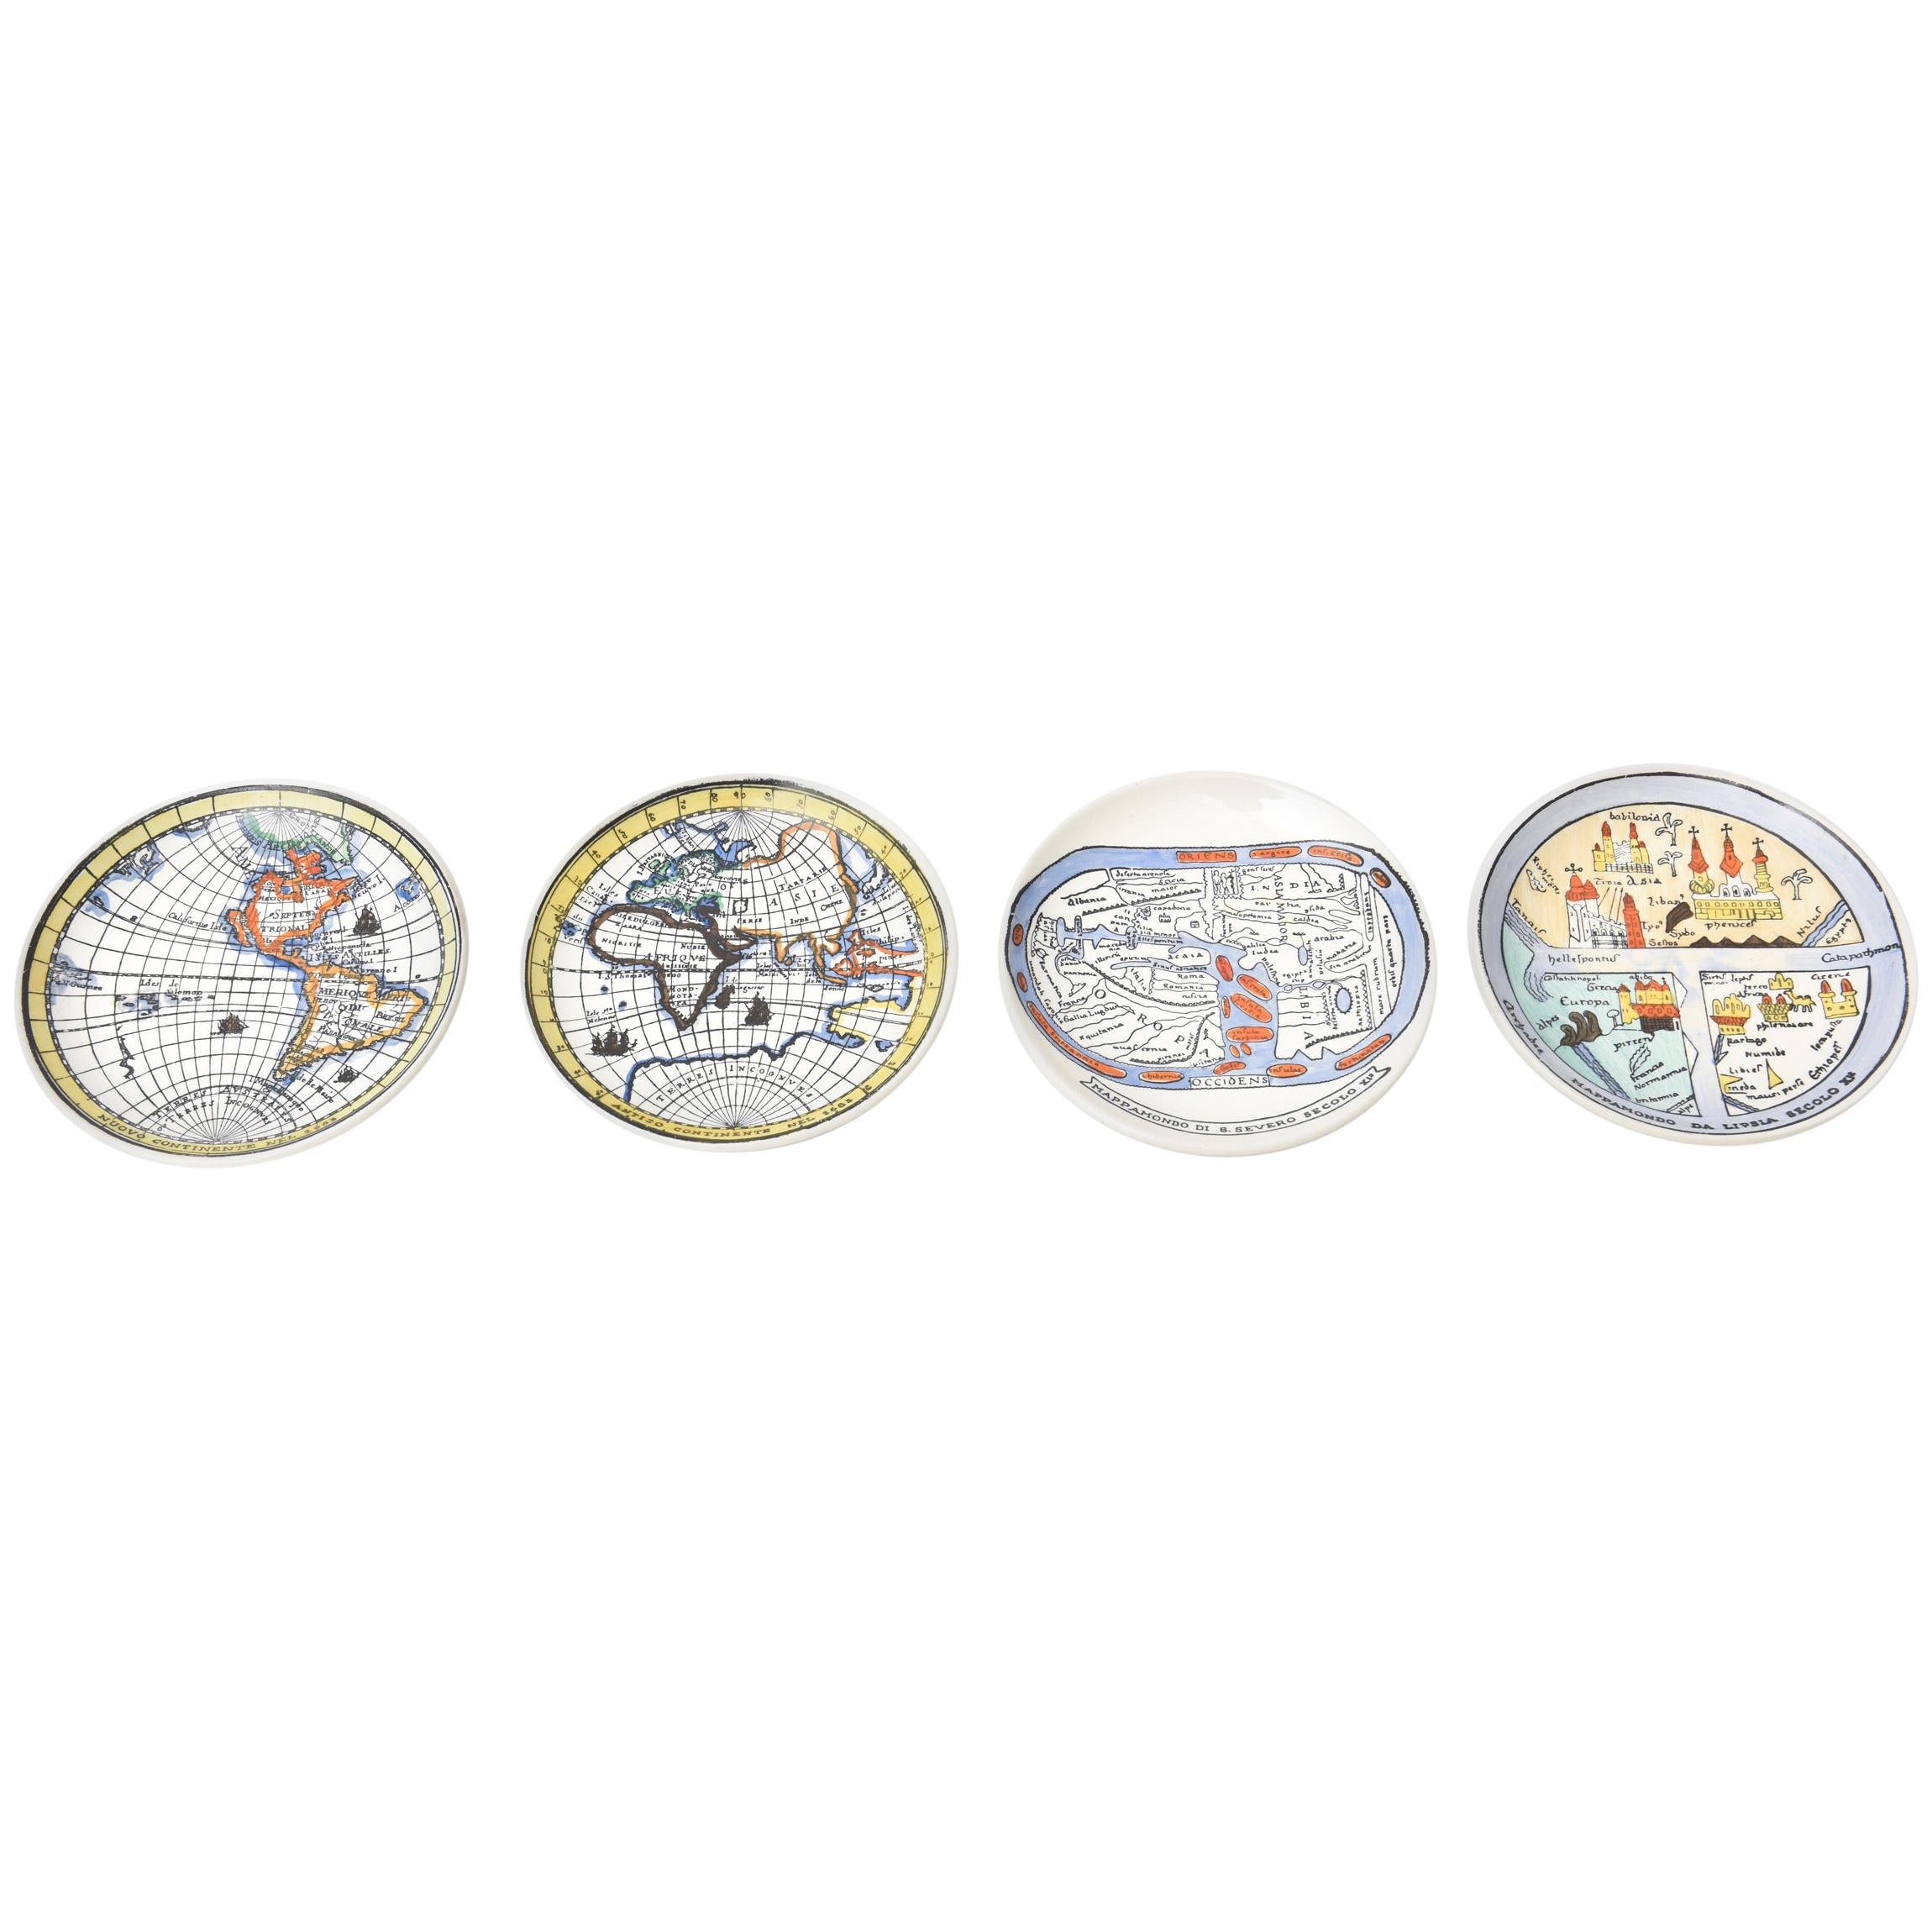 Piero Fornasetti Porcelain Map Coasters from the Antichi Planisfori Barware